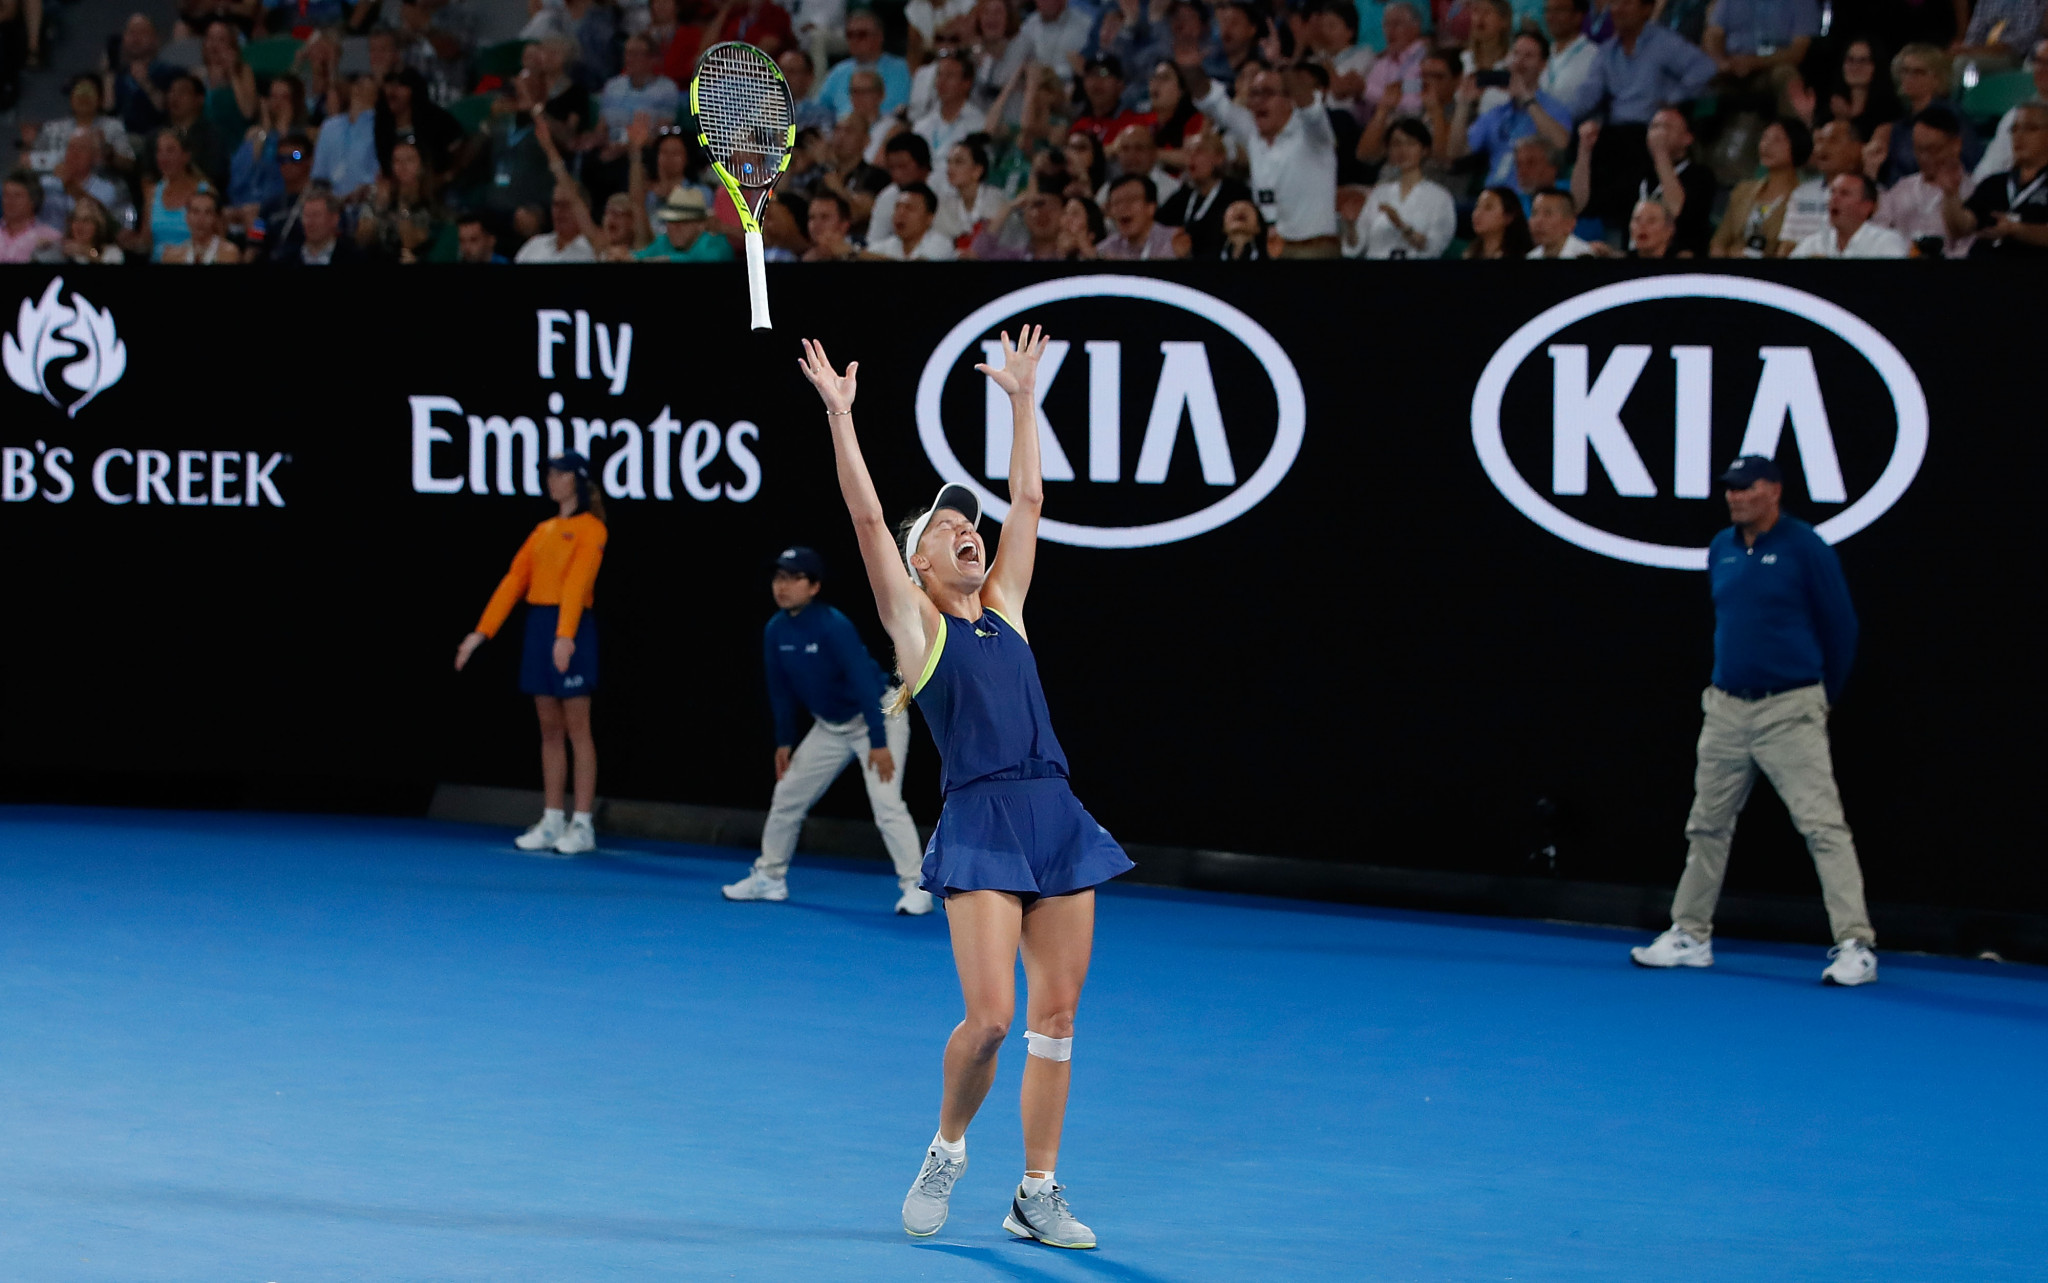 Wozniacki beats Halep to win first Grand Slam title in thrilling Australian Open final